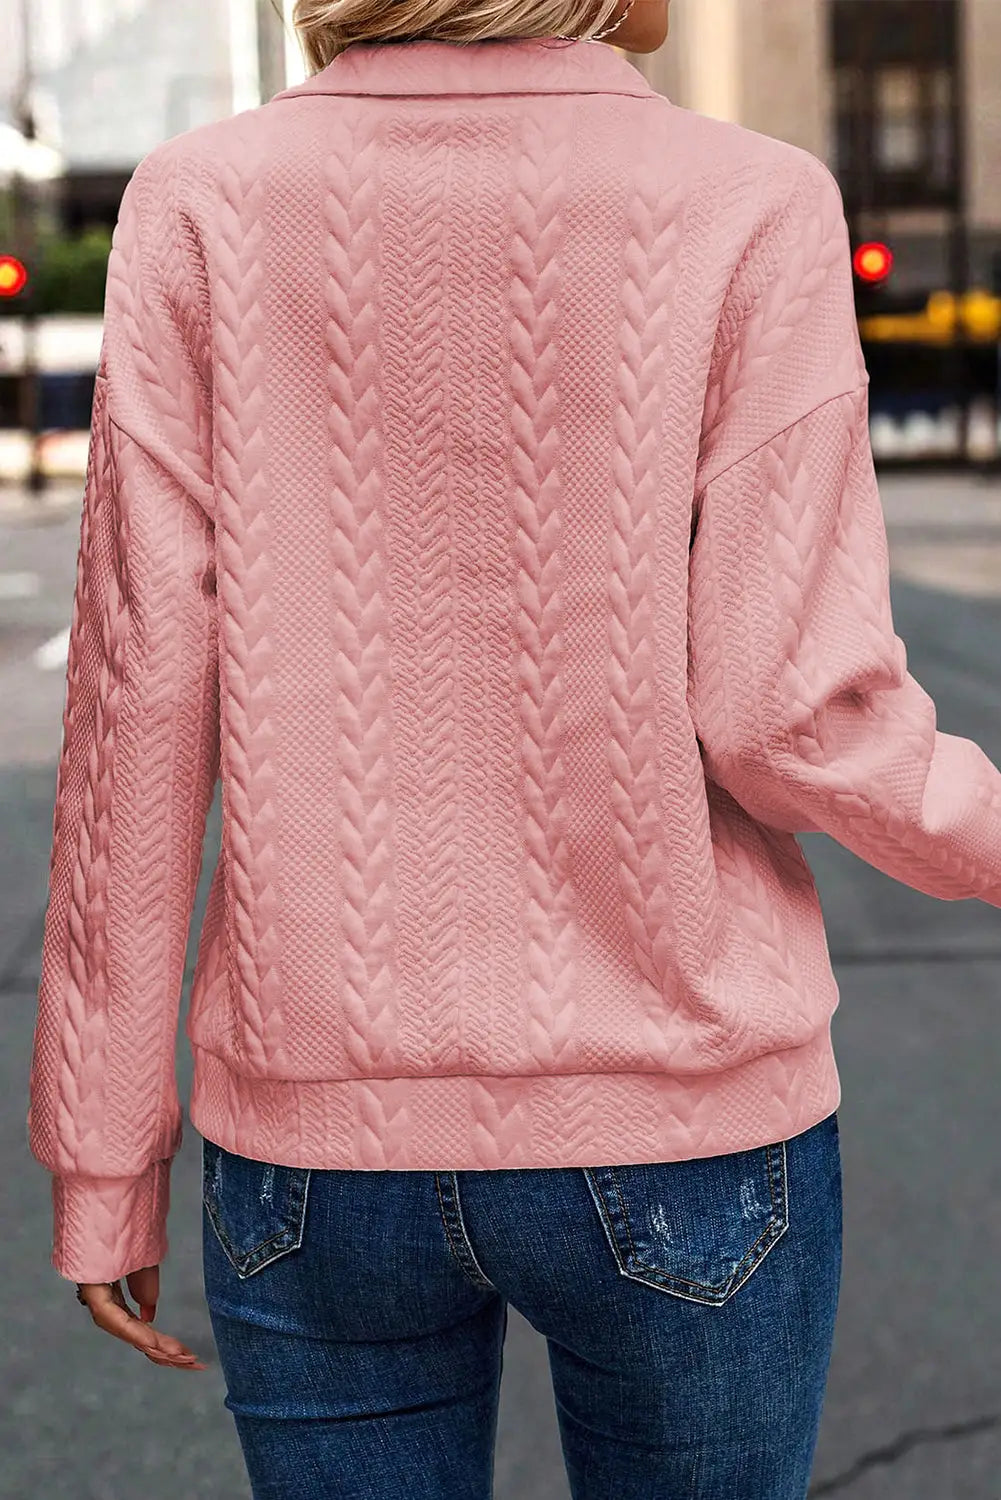 Peach blossom zip up cable textured sweatshirt - sweatshirts & hoodies